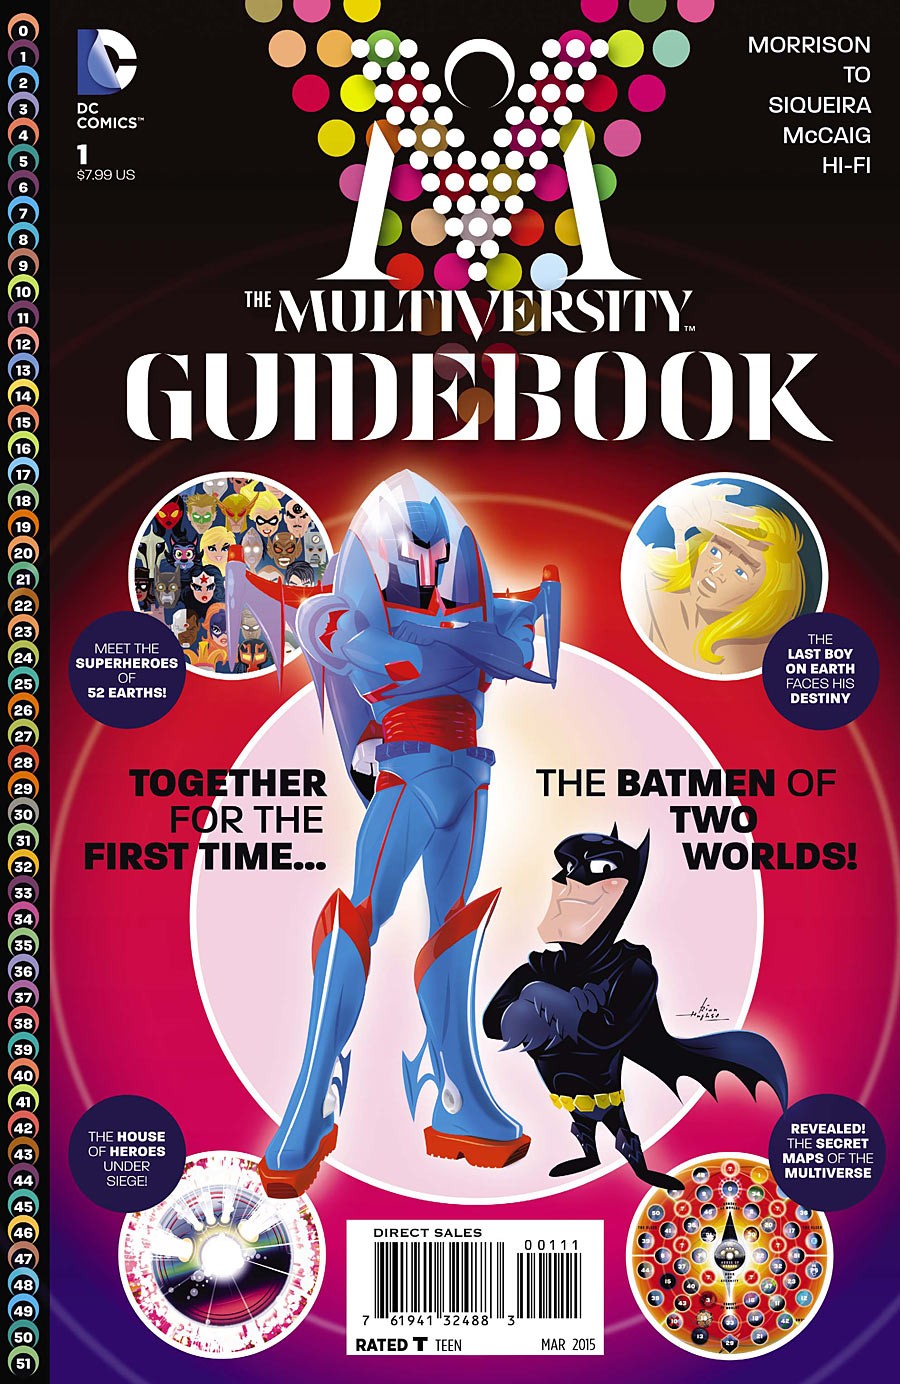 The Multiversity Guidebook Vol. 1 #1